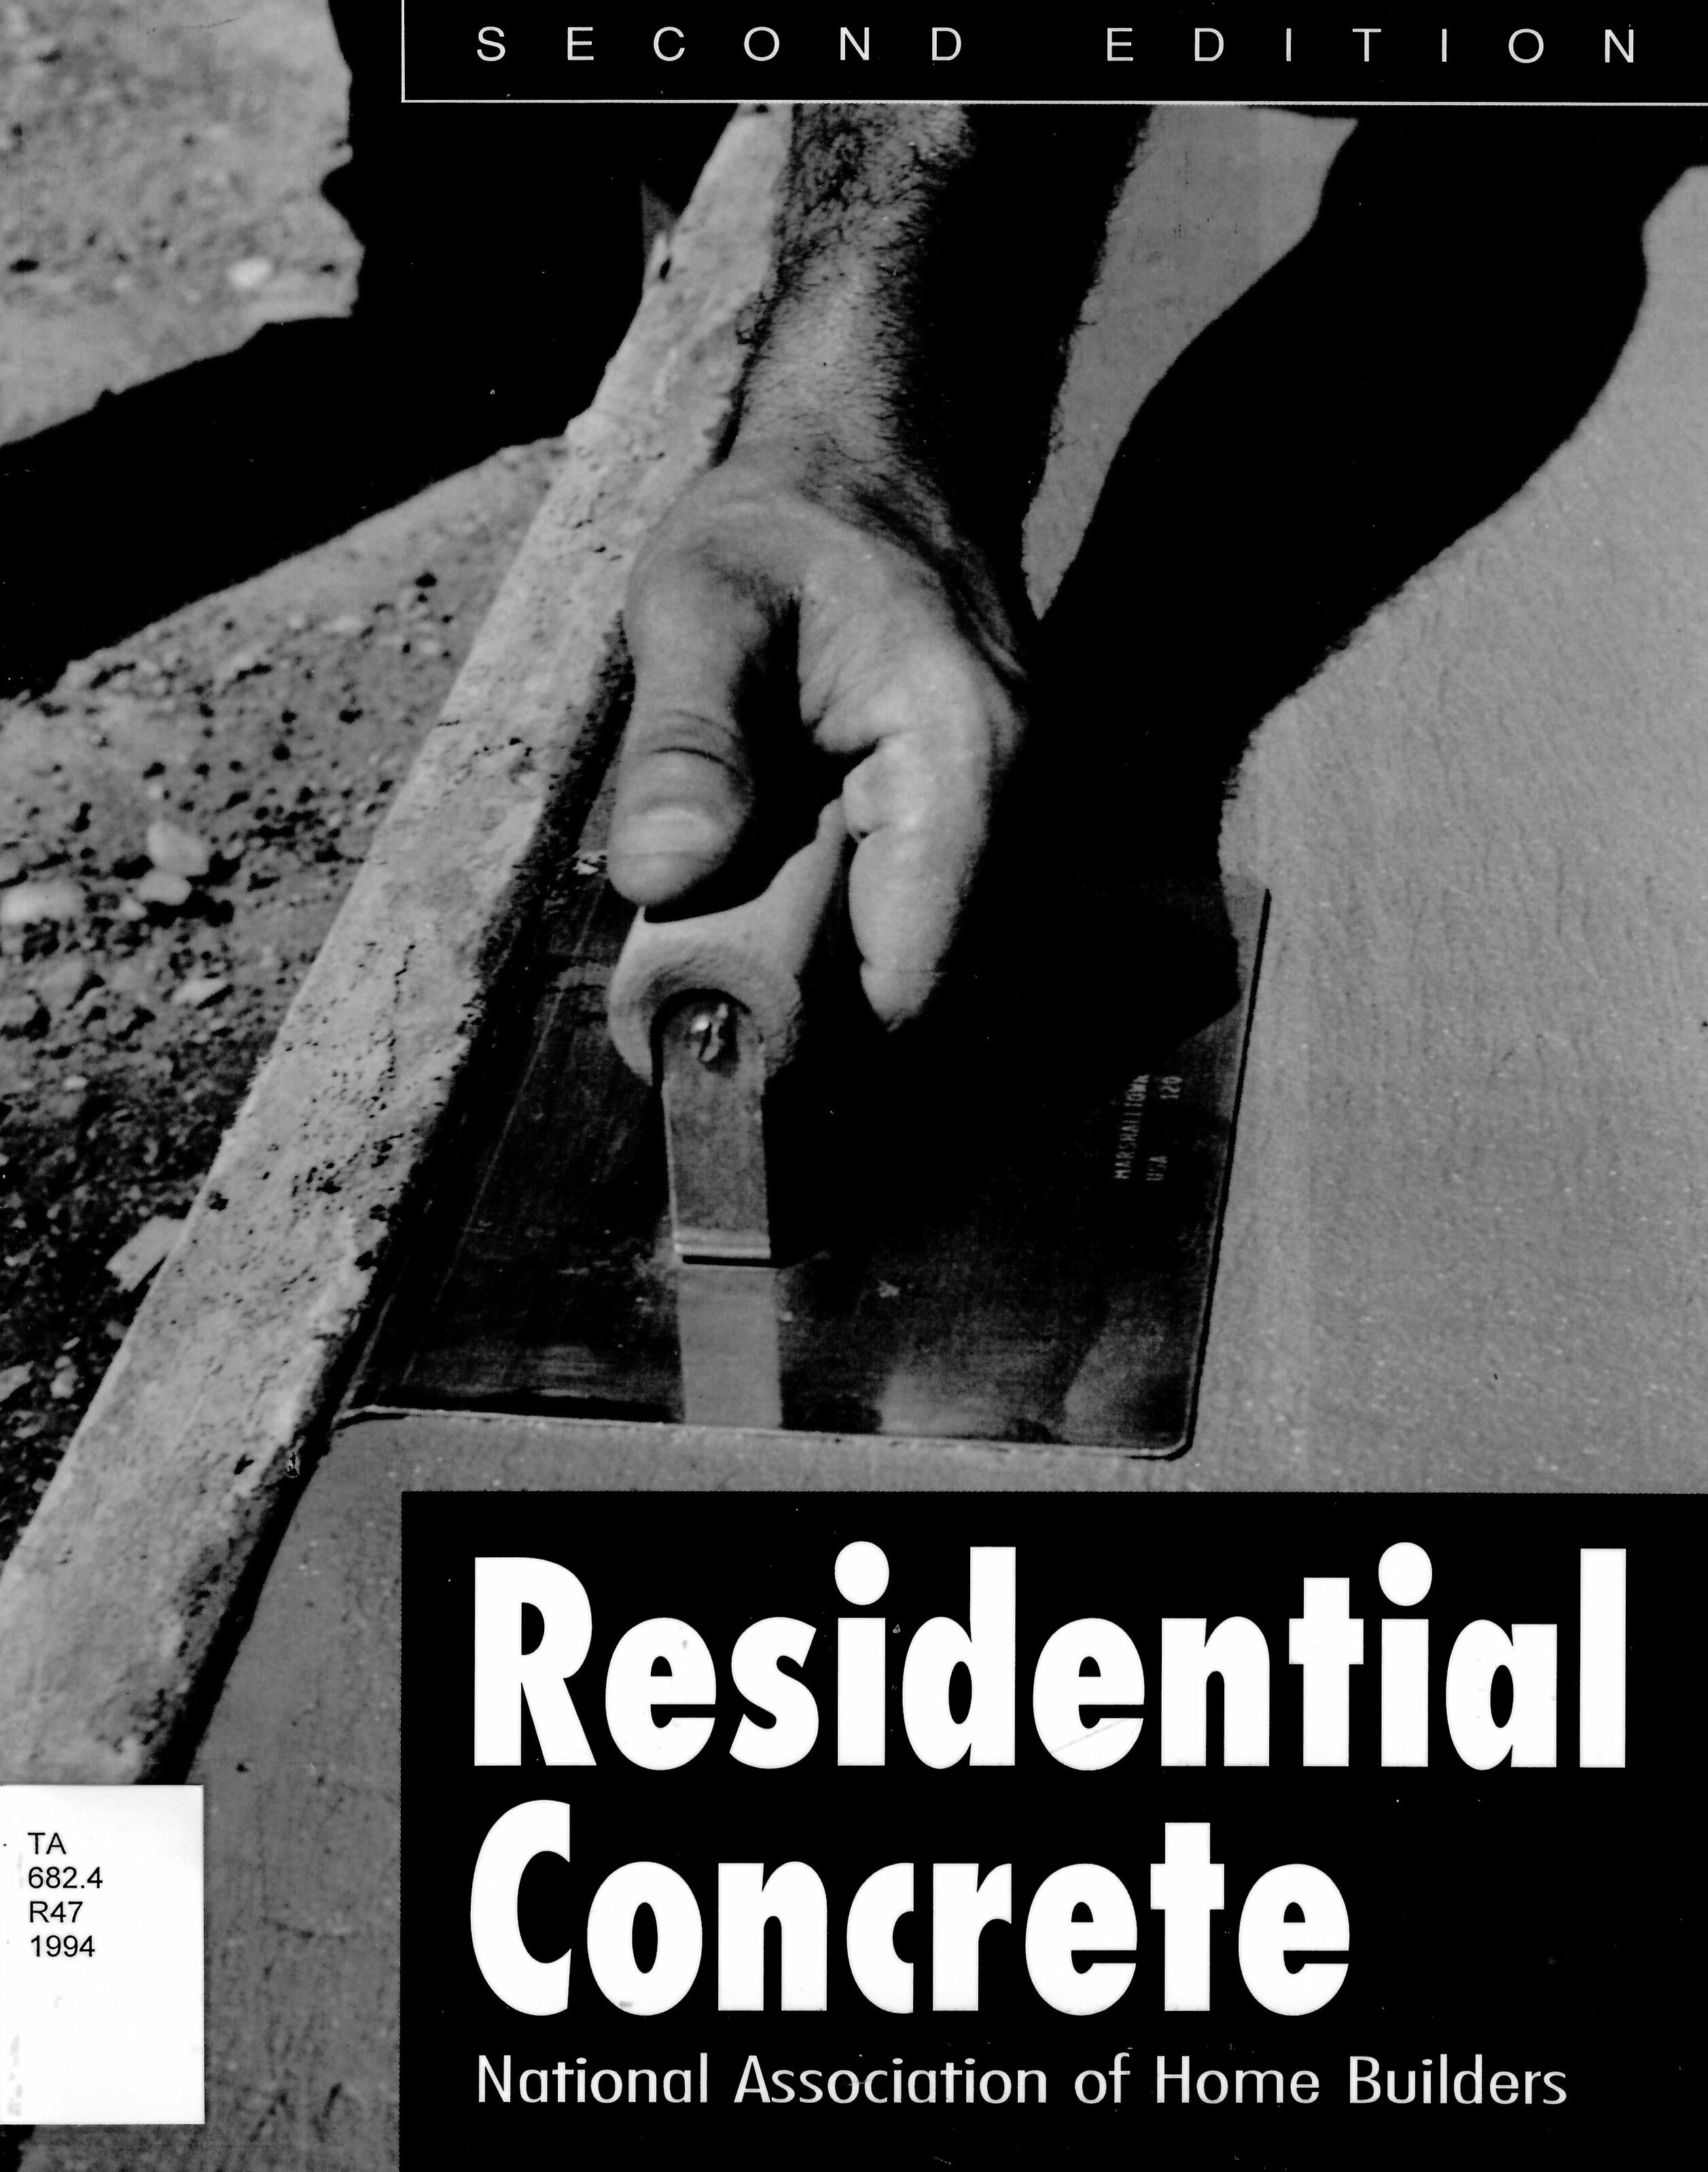 Residential concrete